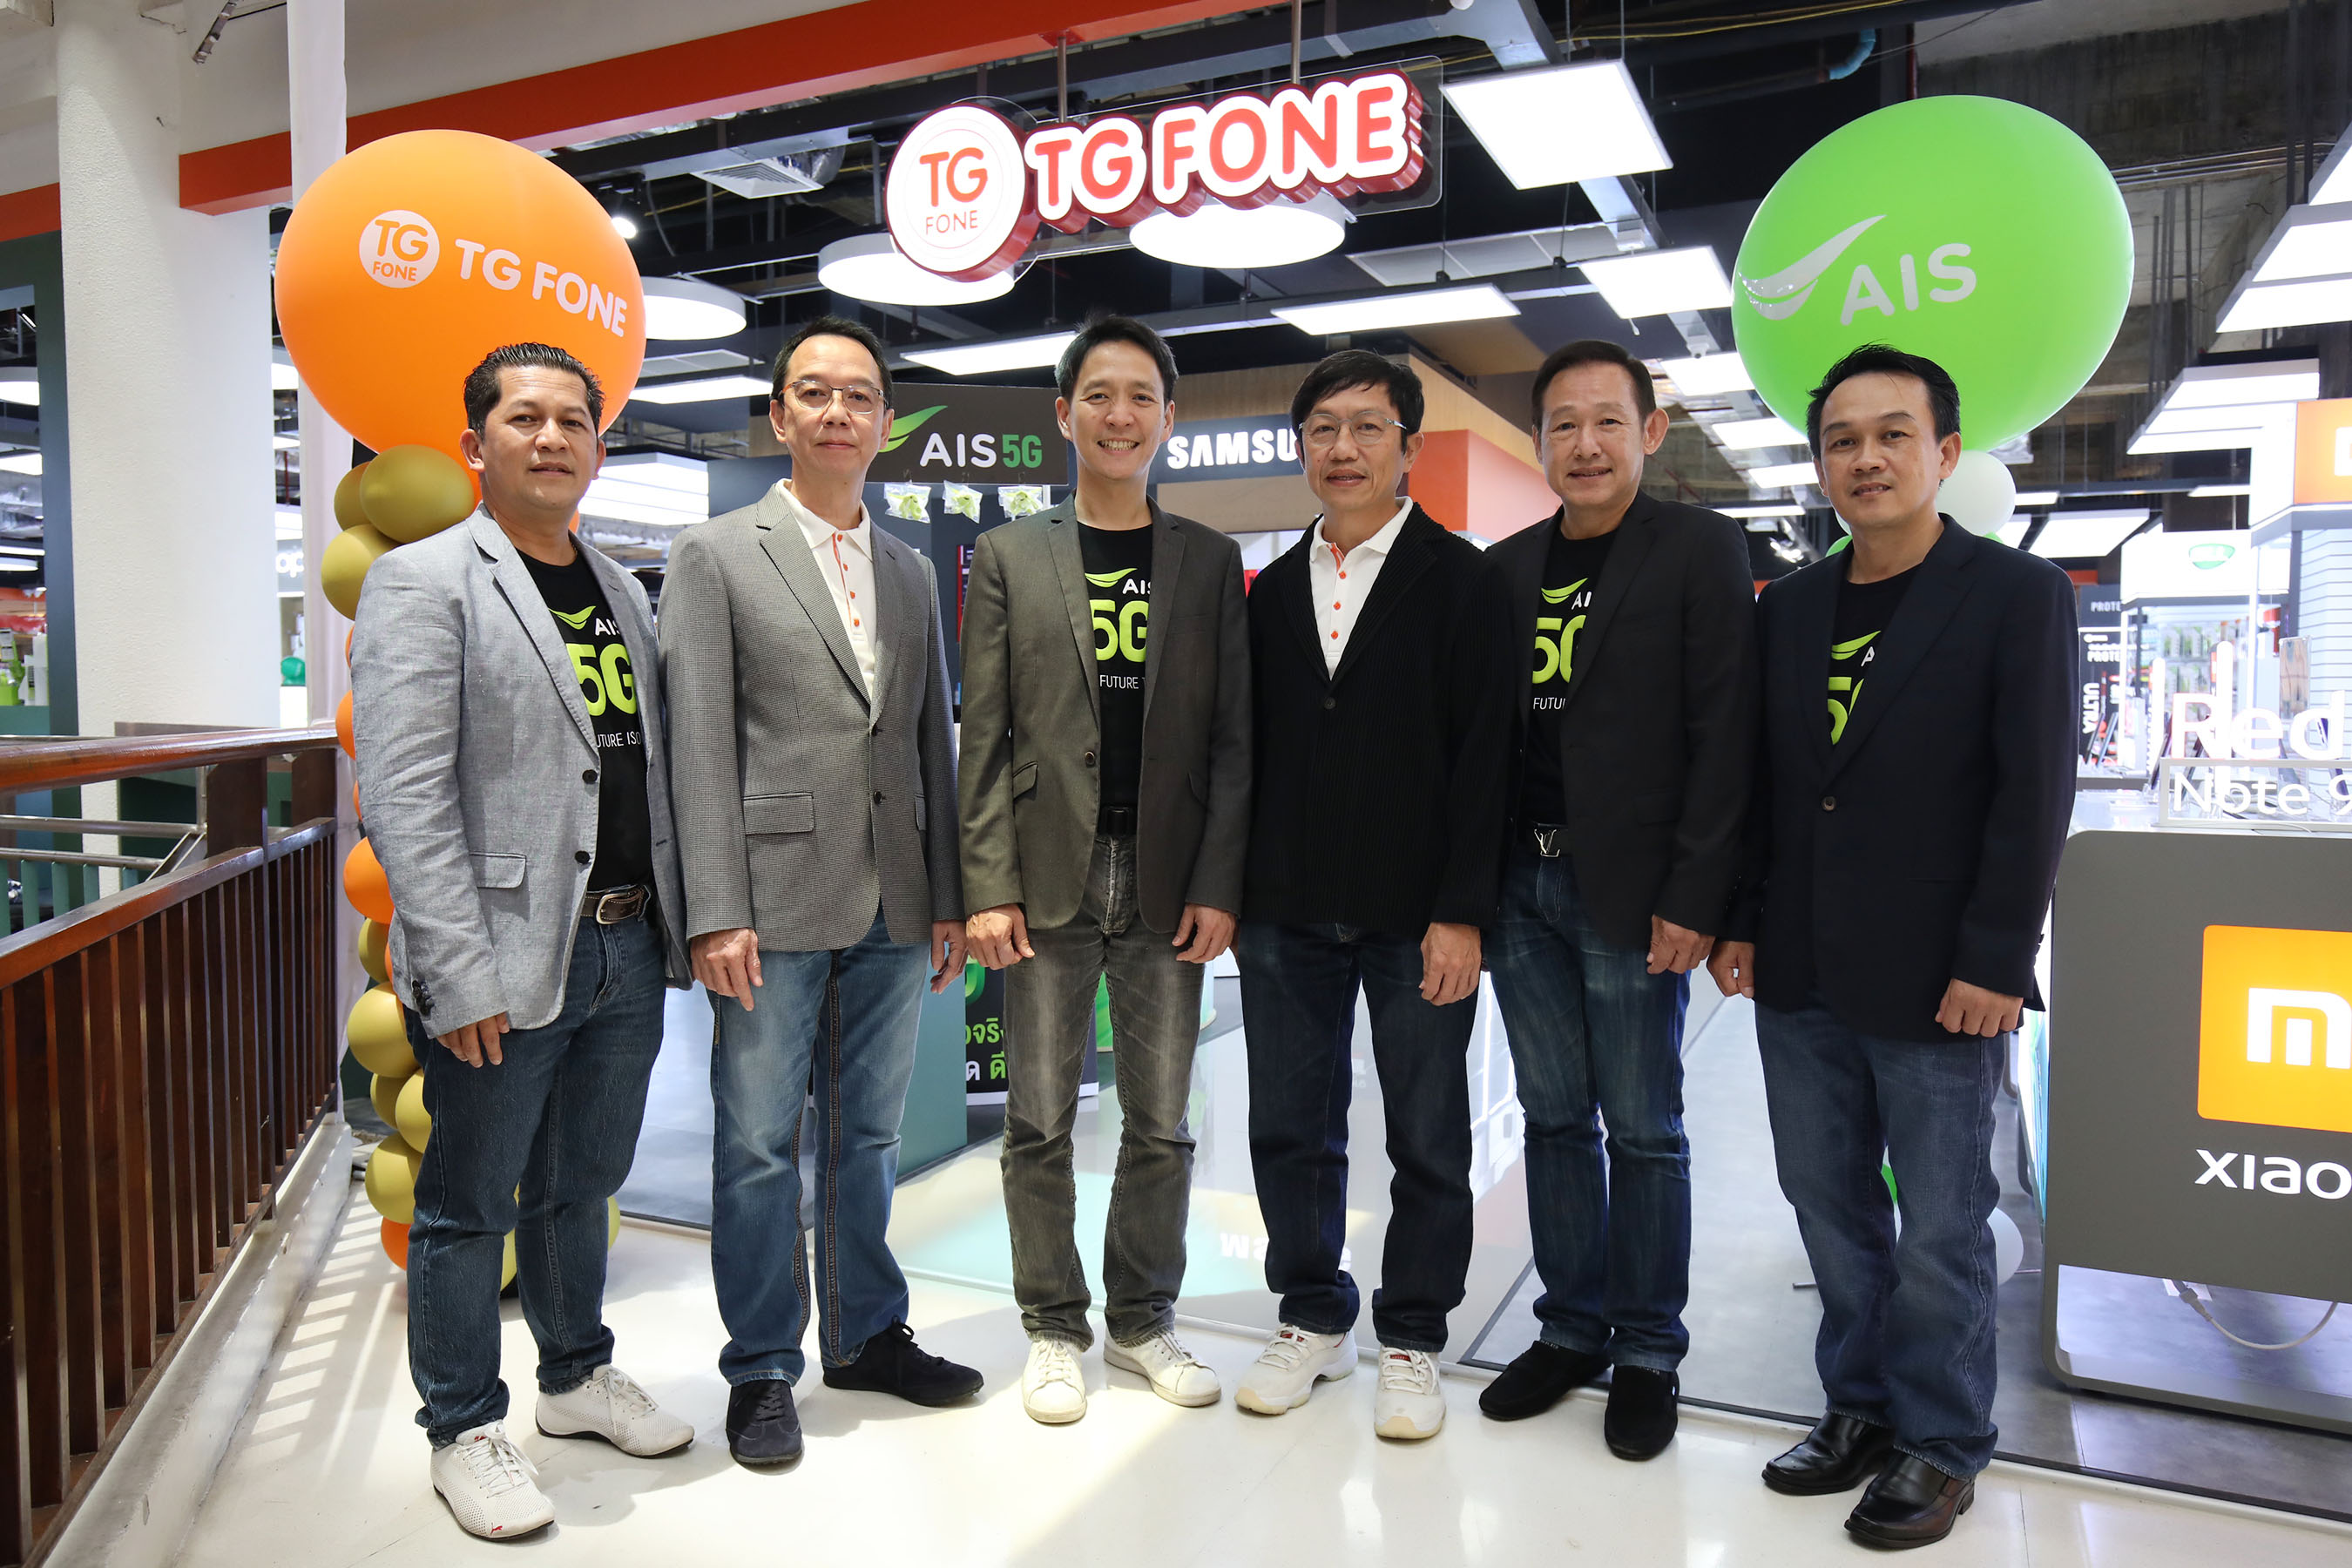 AIS ผนึก TG FONE ซินเนอร์ยี่เสริมศักยภาพธุรกิจ มอบความสะดวกให้ลูกค้าเข้าถึงสินค้าและบริการดิจิทัลผ่านร้าน TG FONE 200 สาขาทุกภูมิภาคทั่วไทย